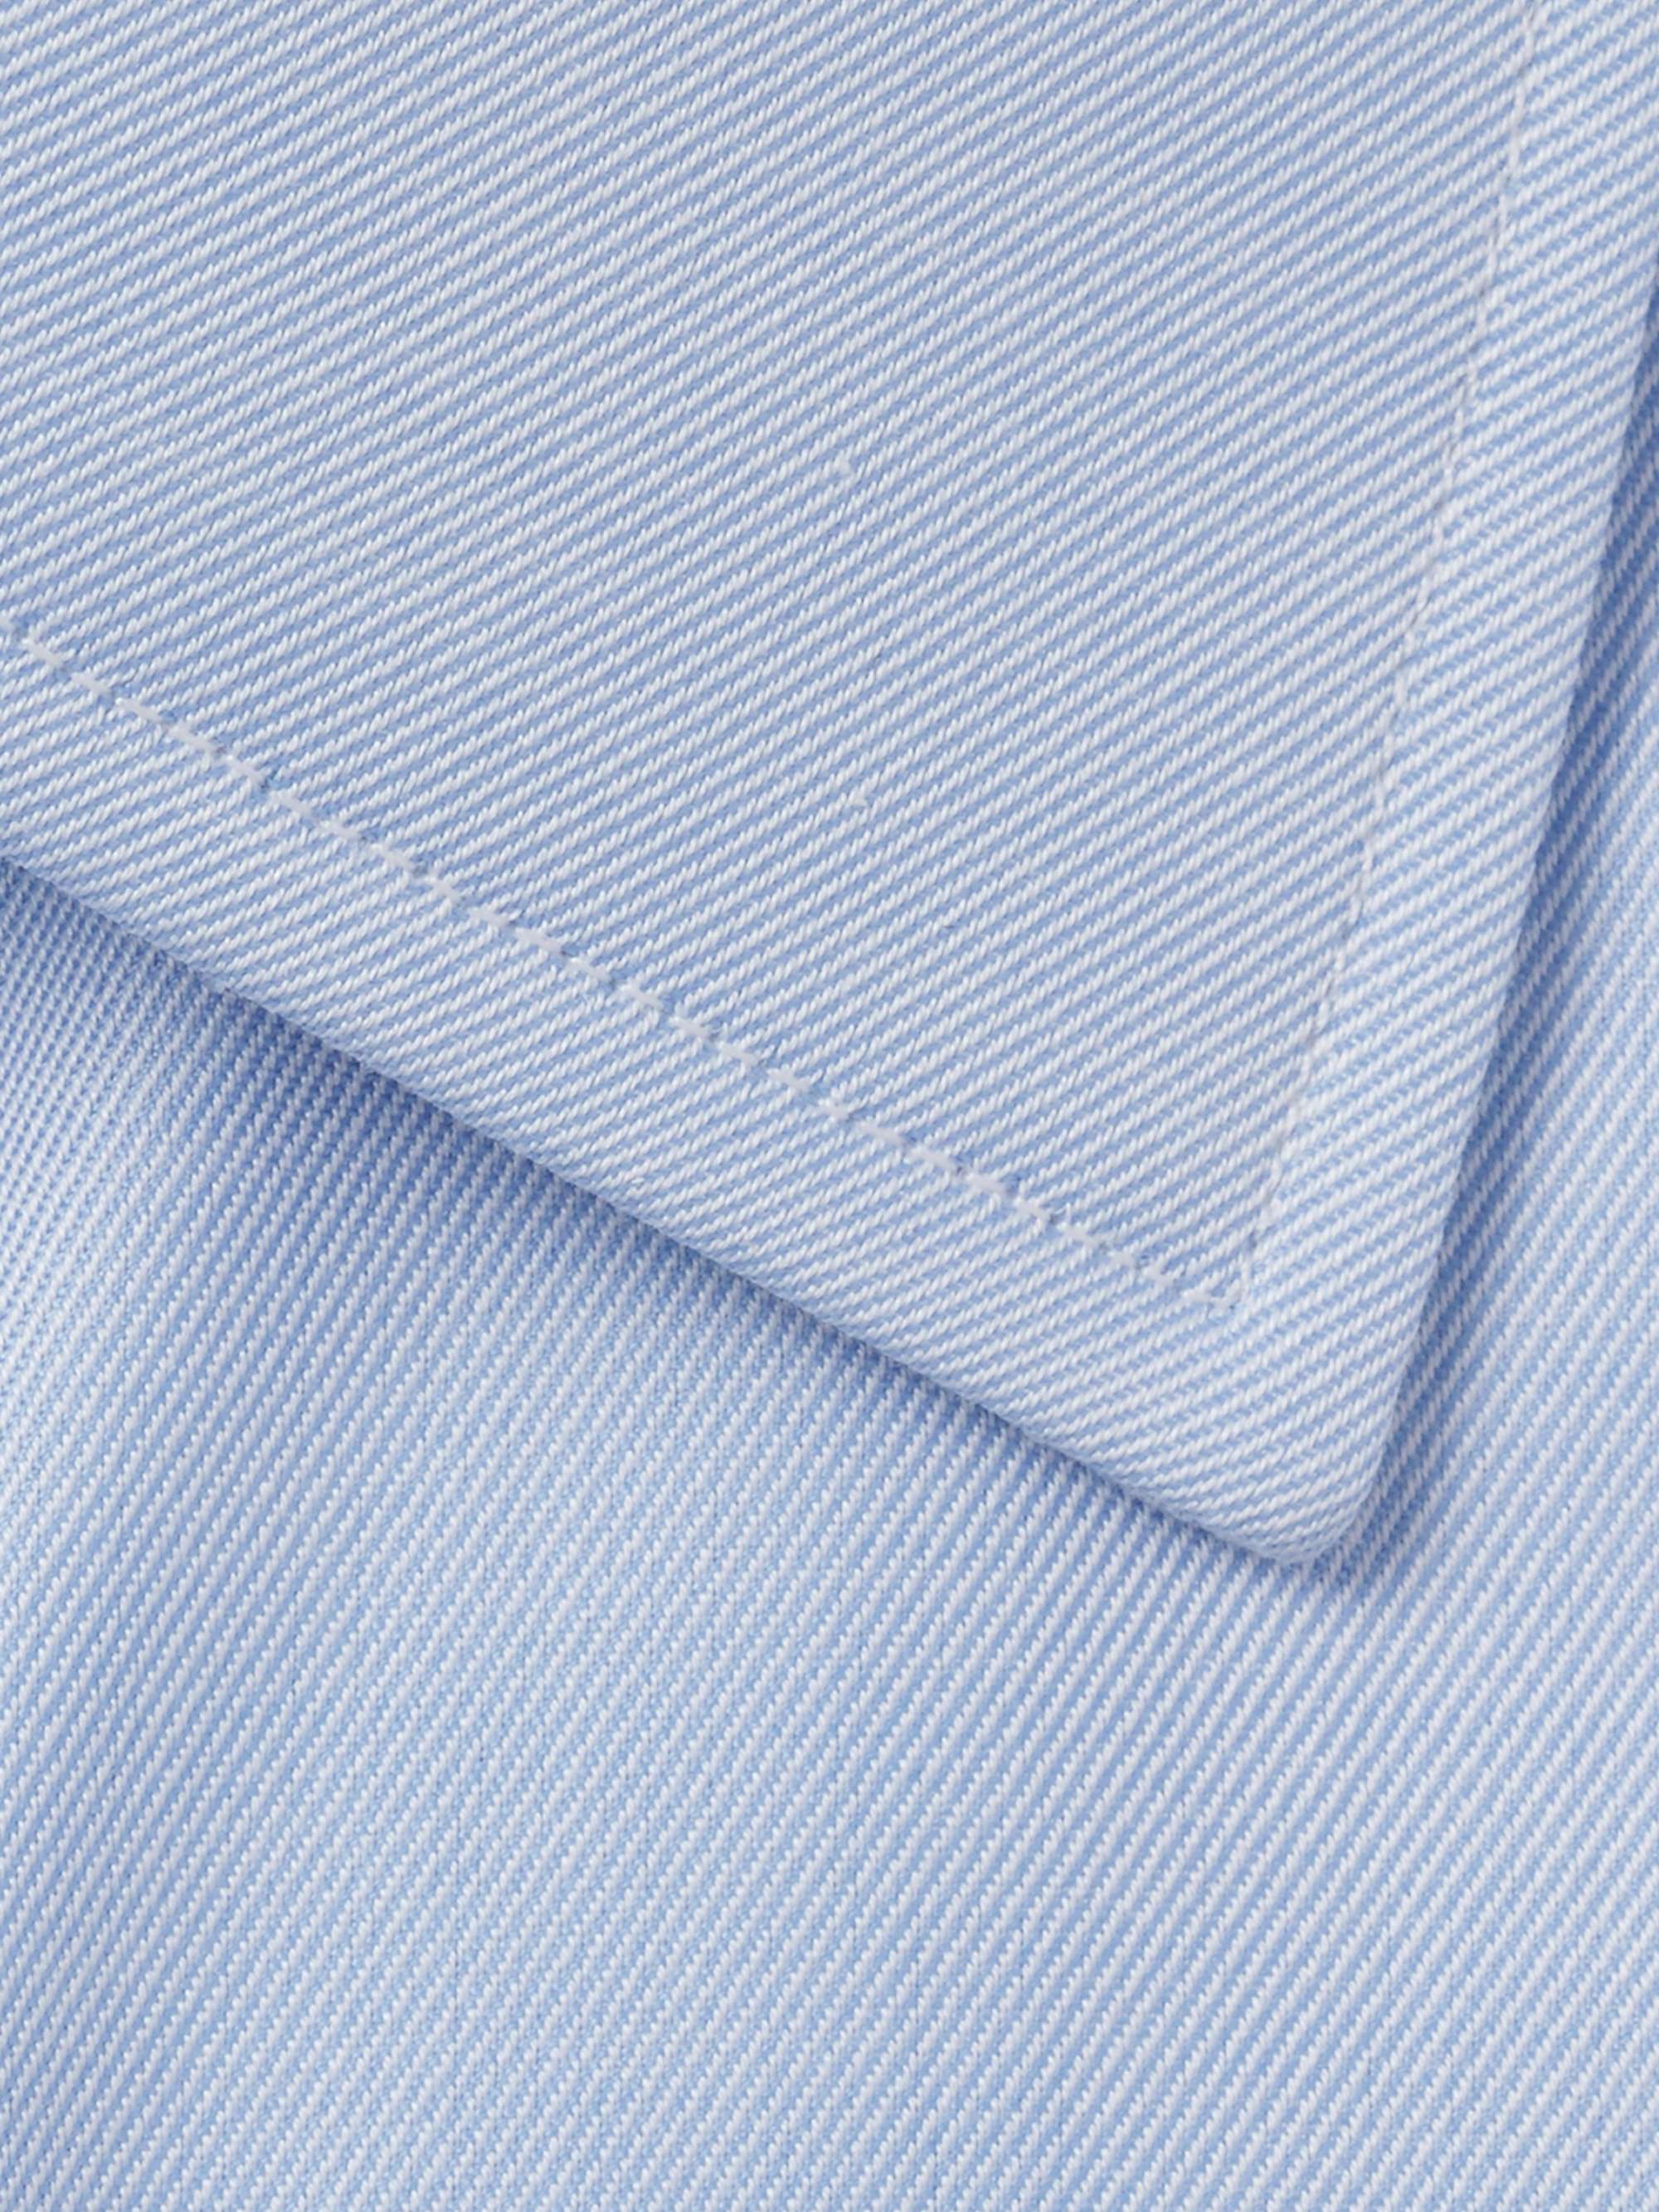 KINGSMAN + Turnbull & Asser Blue Double-Cuff Cotton-Twill Shirt